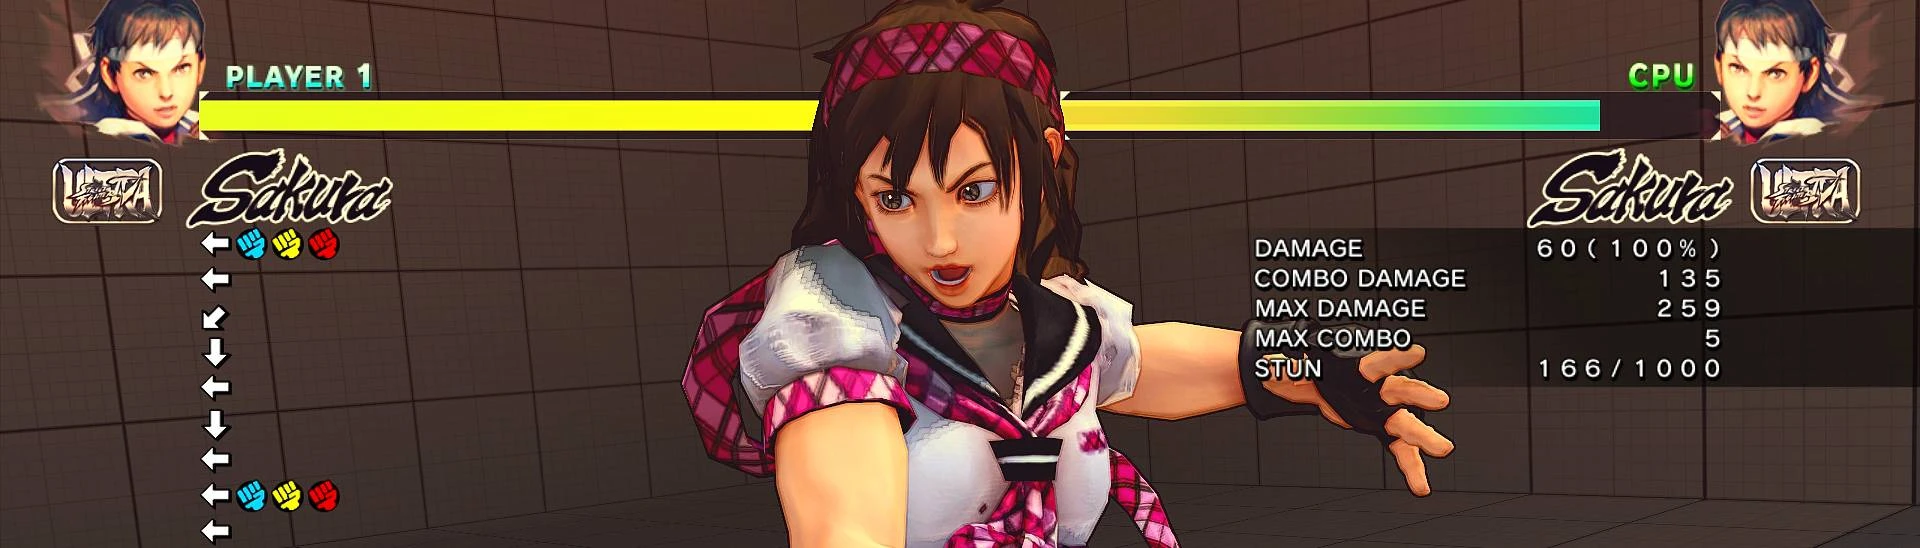 Sakura Original Outfit Compilation 2.0 at Ultra Street Fighter IV 